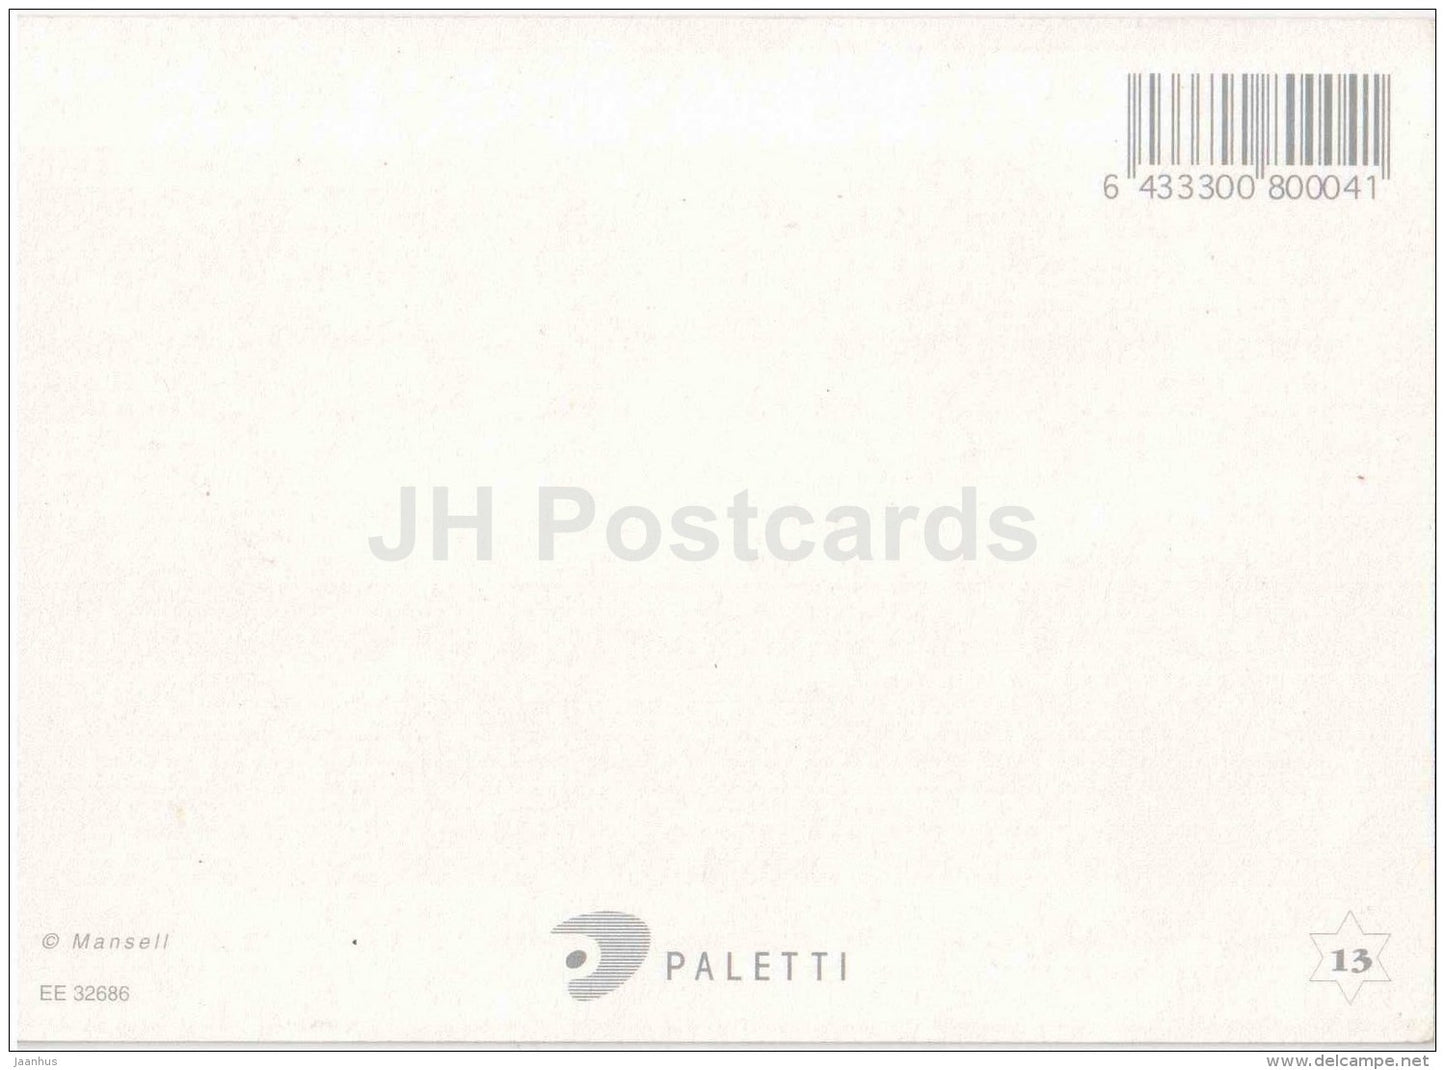 Birthday Greeting card - Boy with Kite - illustration - Estonia - unused - JH Postcards